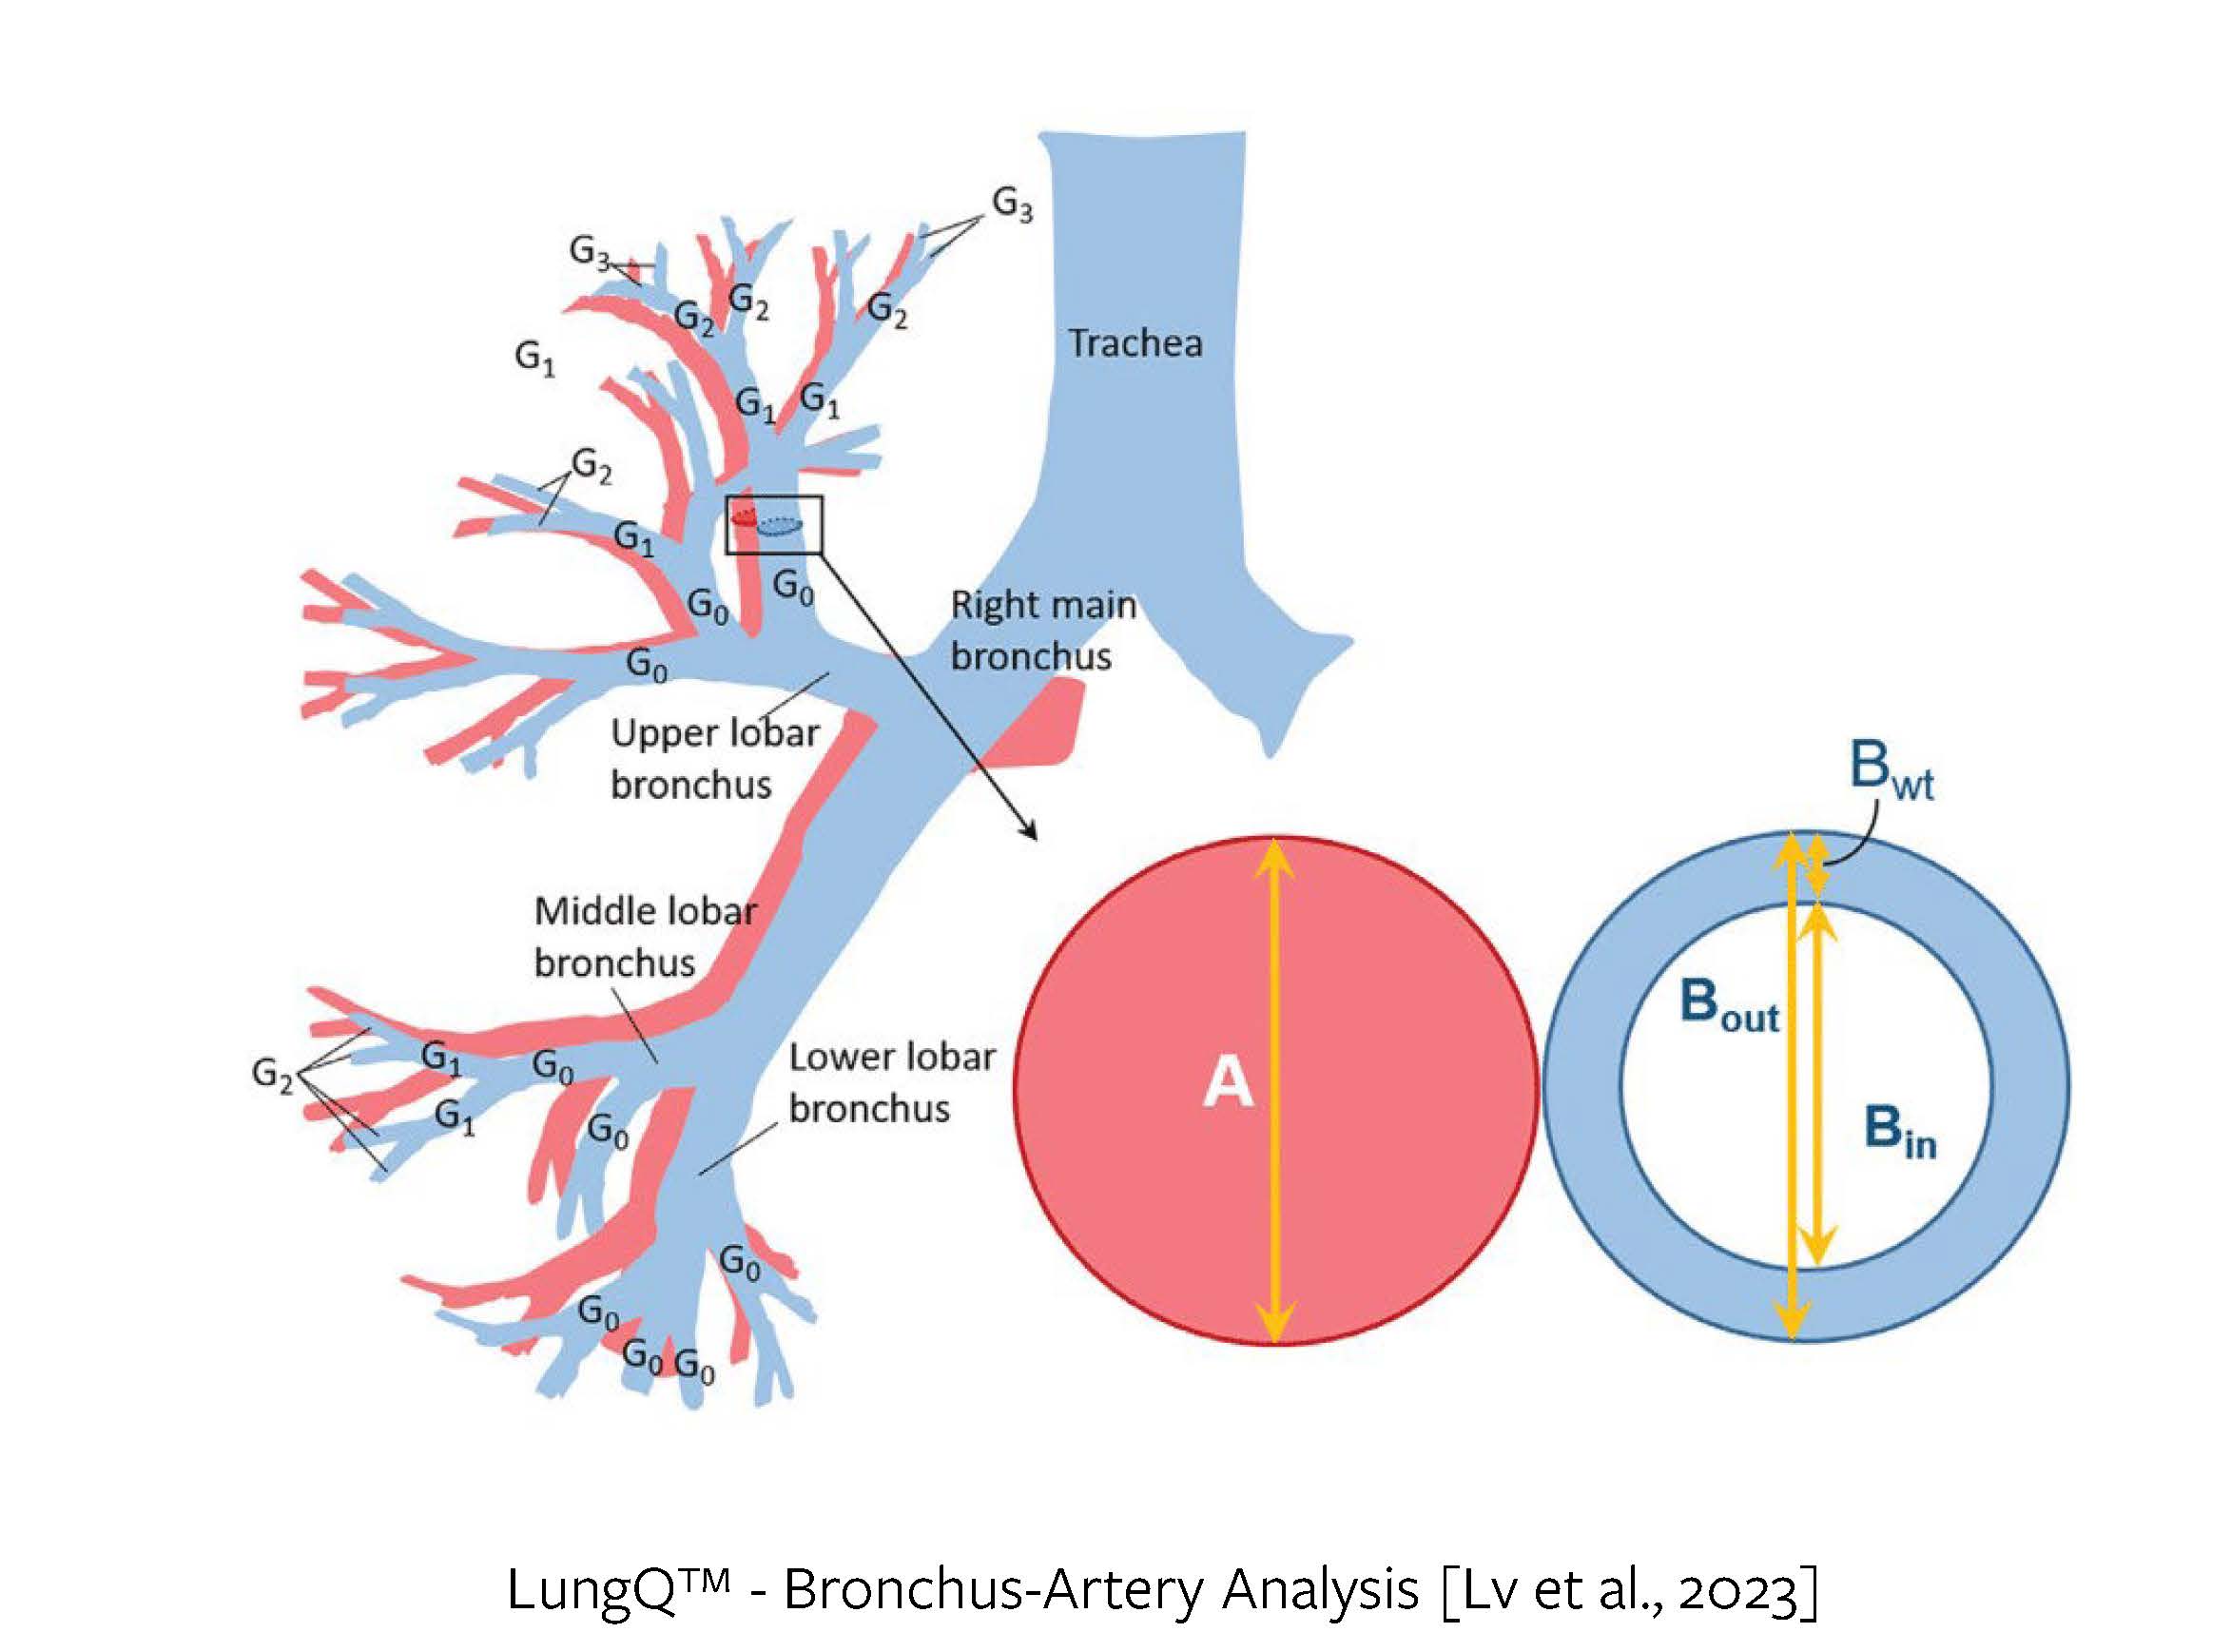 Bronchus-artery analysis algorithm measurements